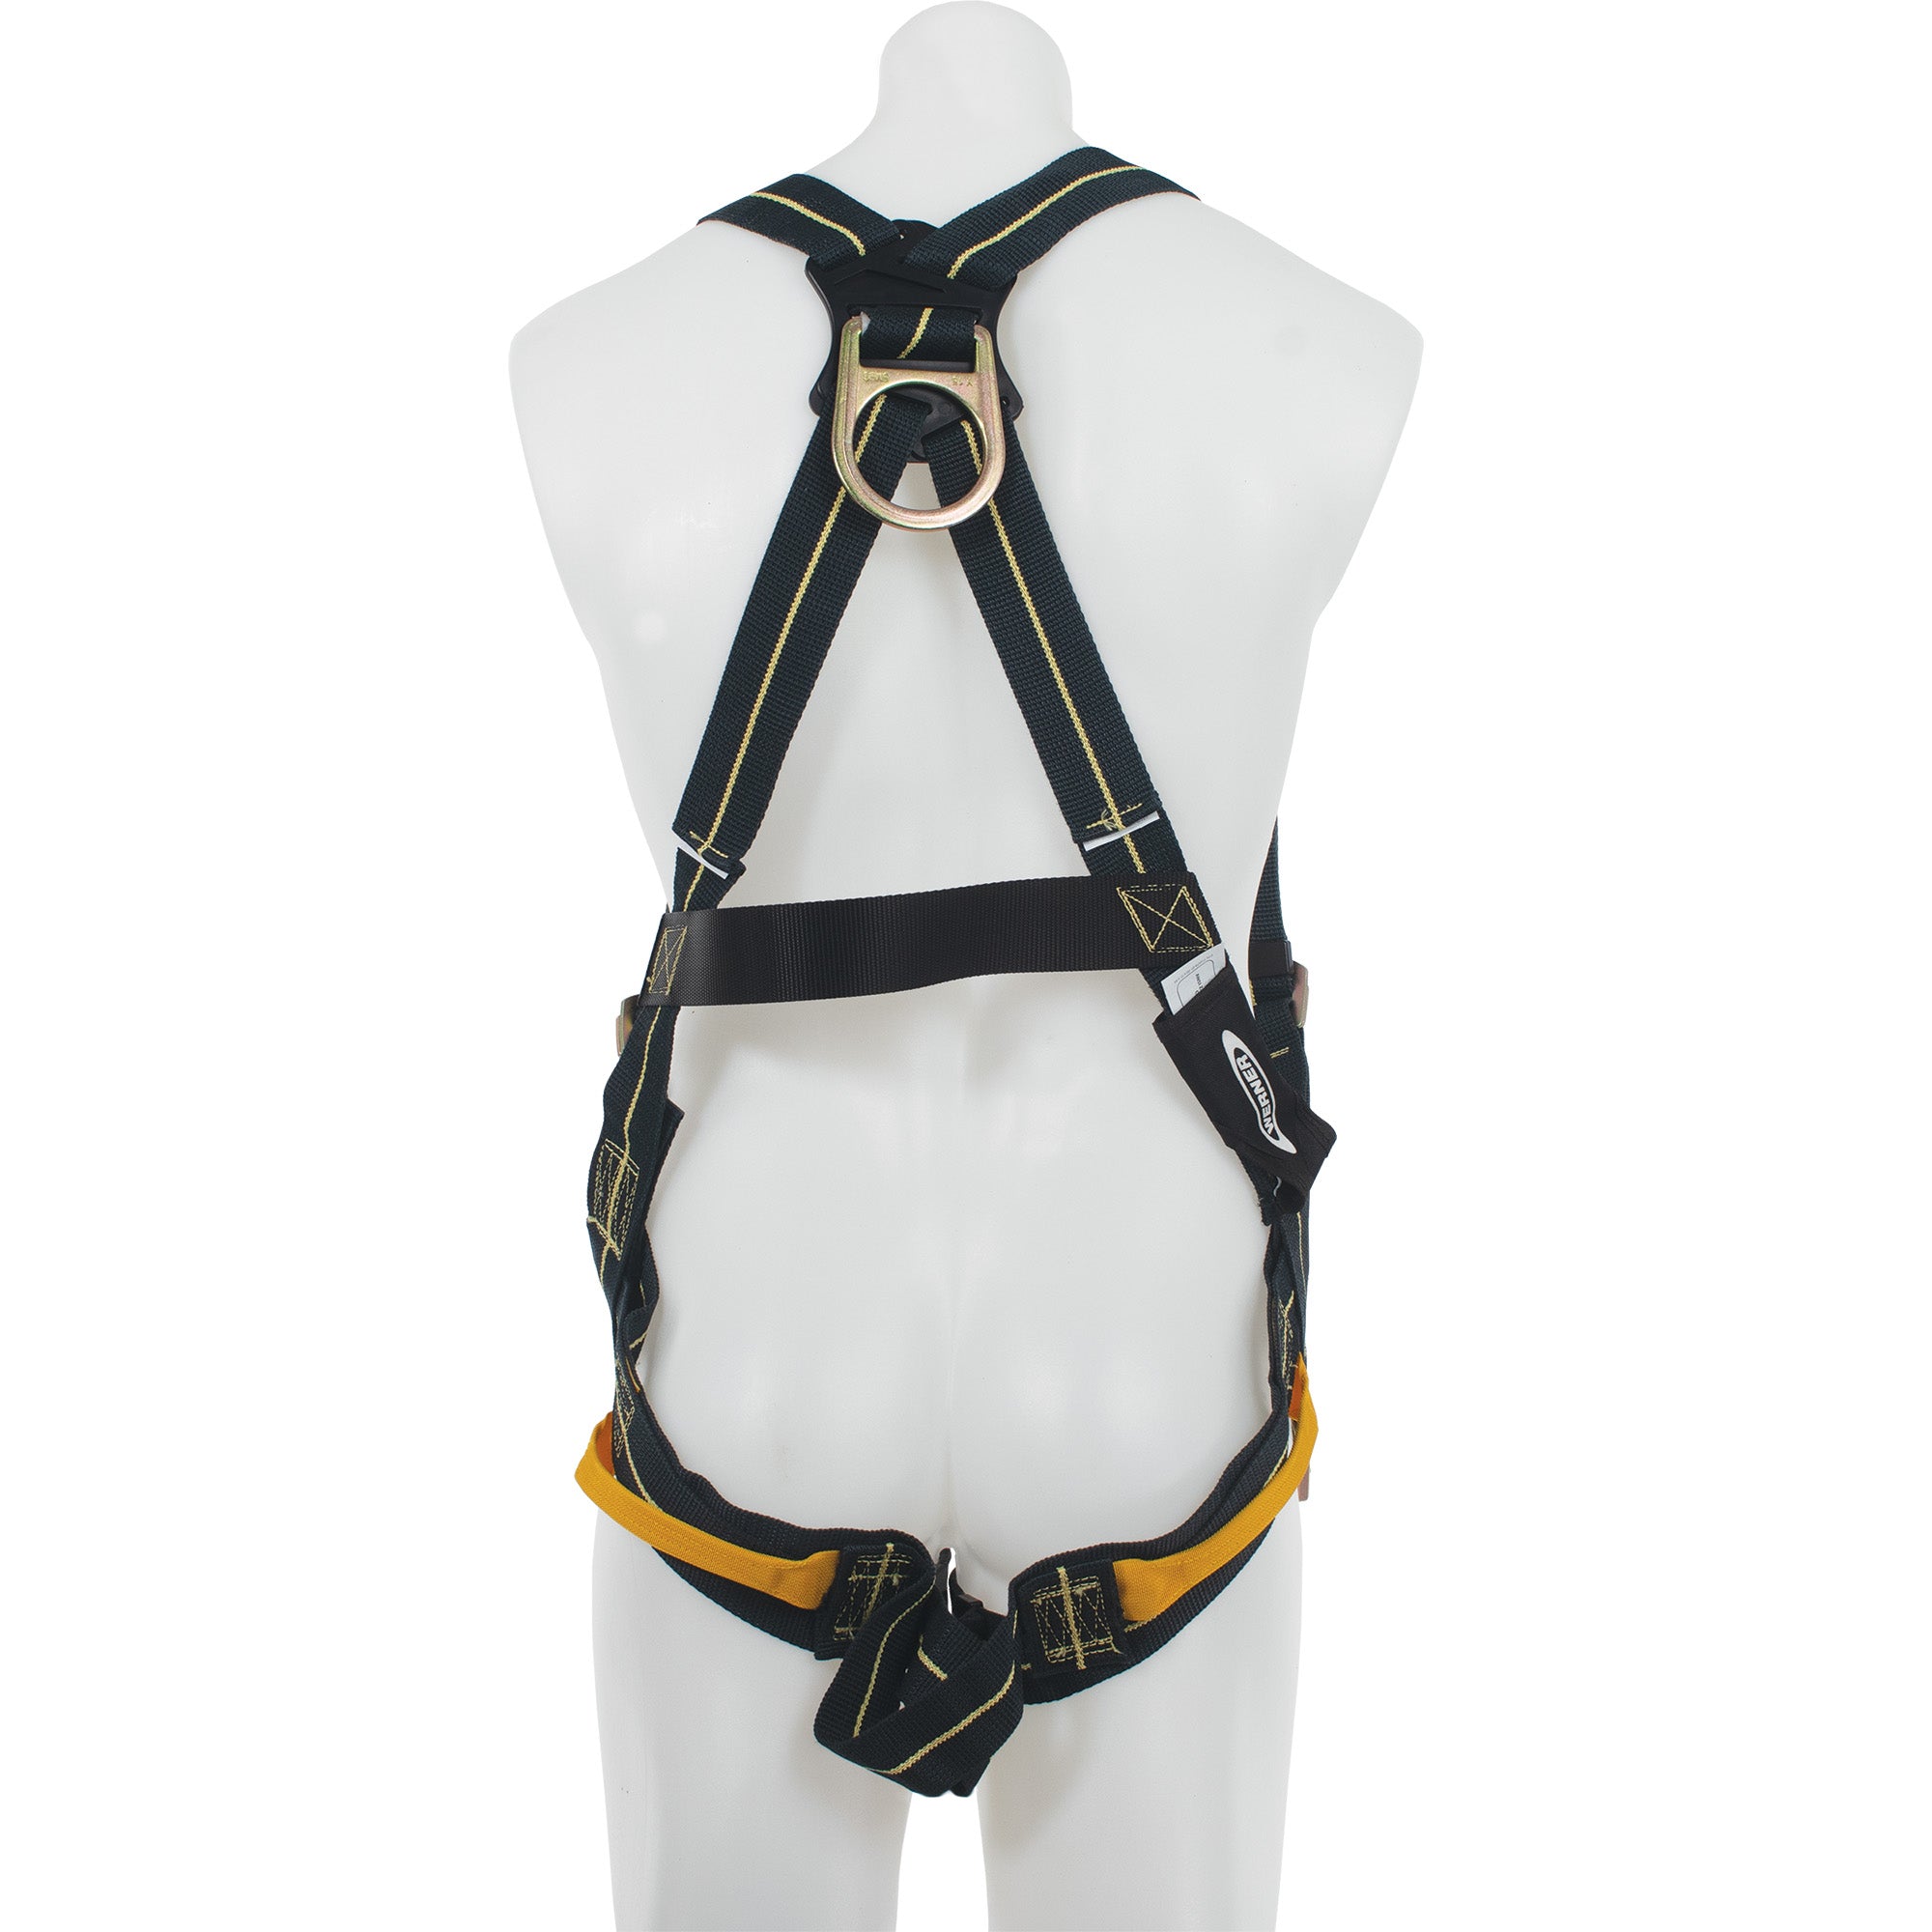 American Ladders & Scaffolds, Blue Armor Welding Standard Harness, Quick Connect Legs